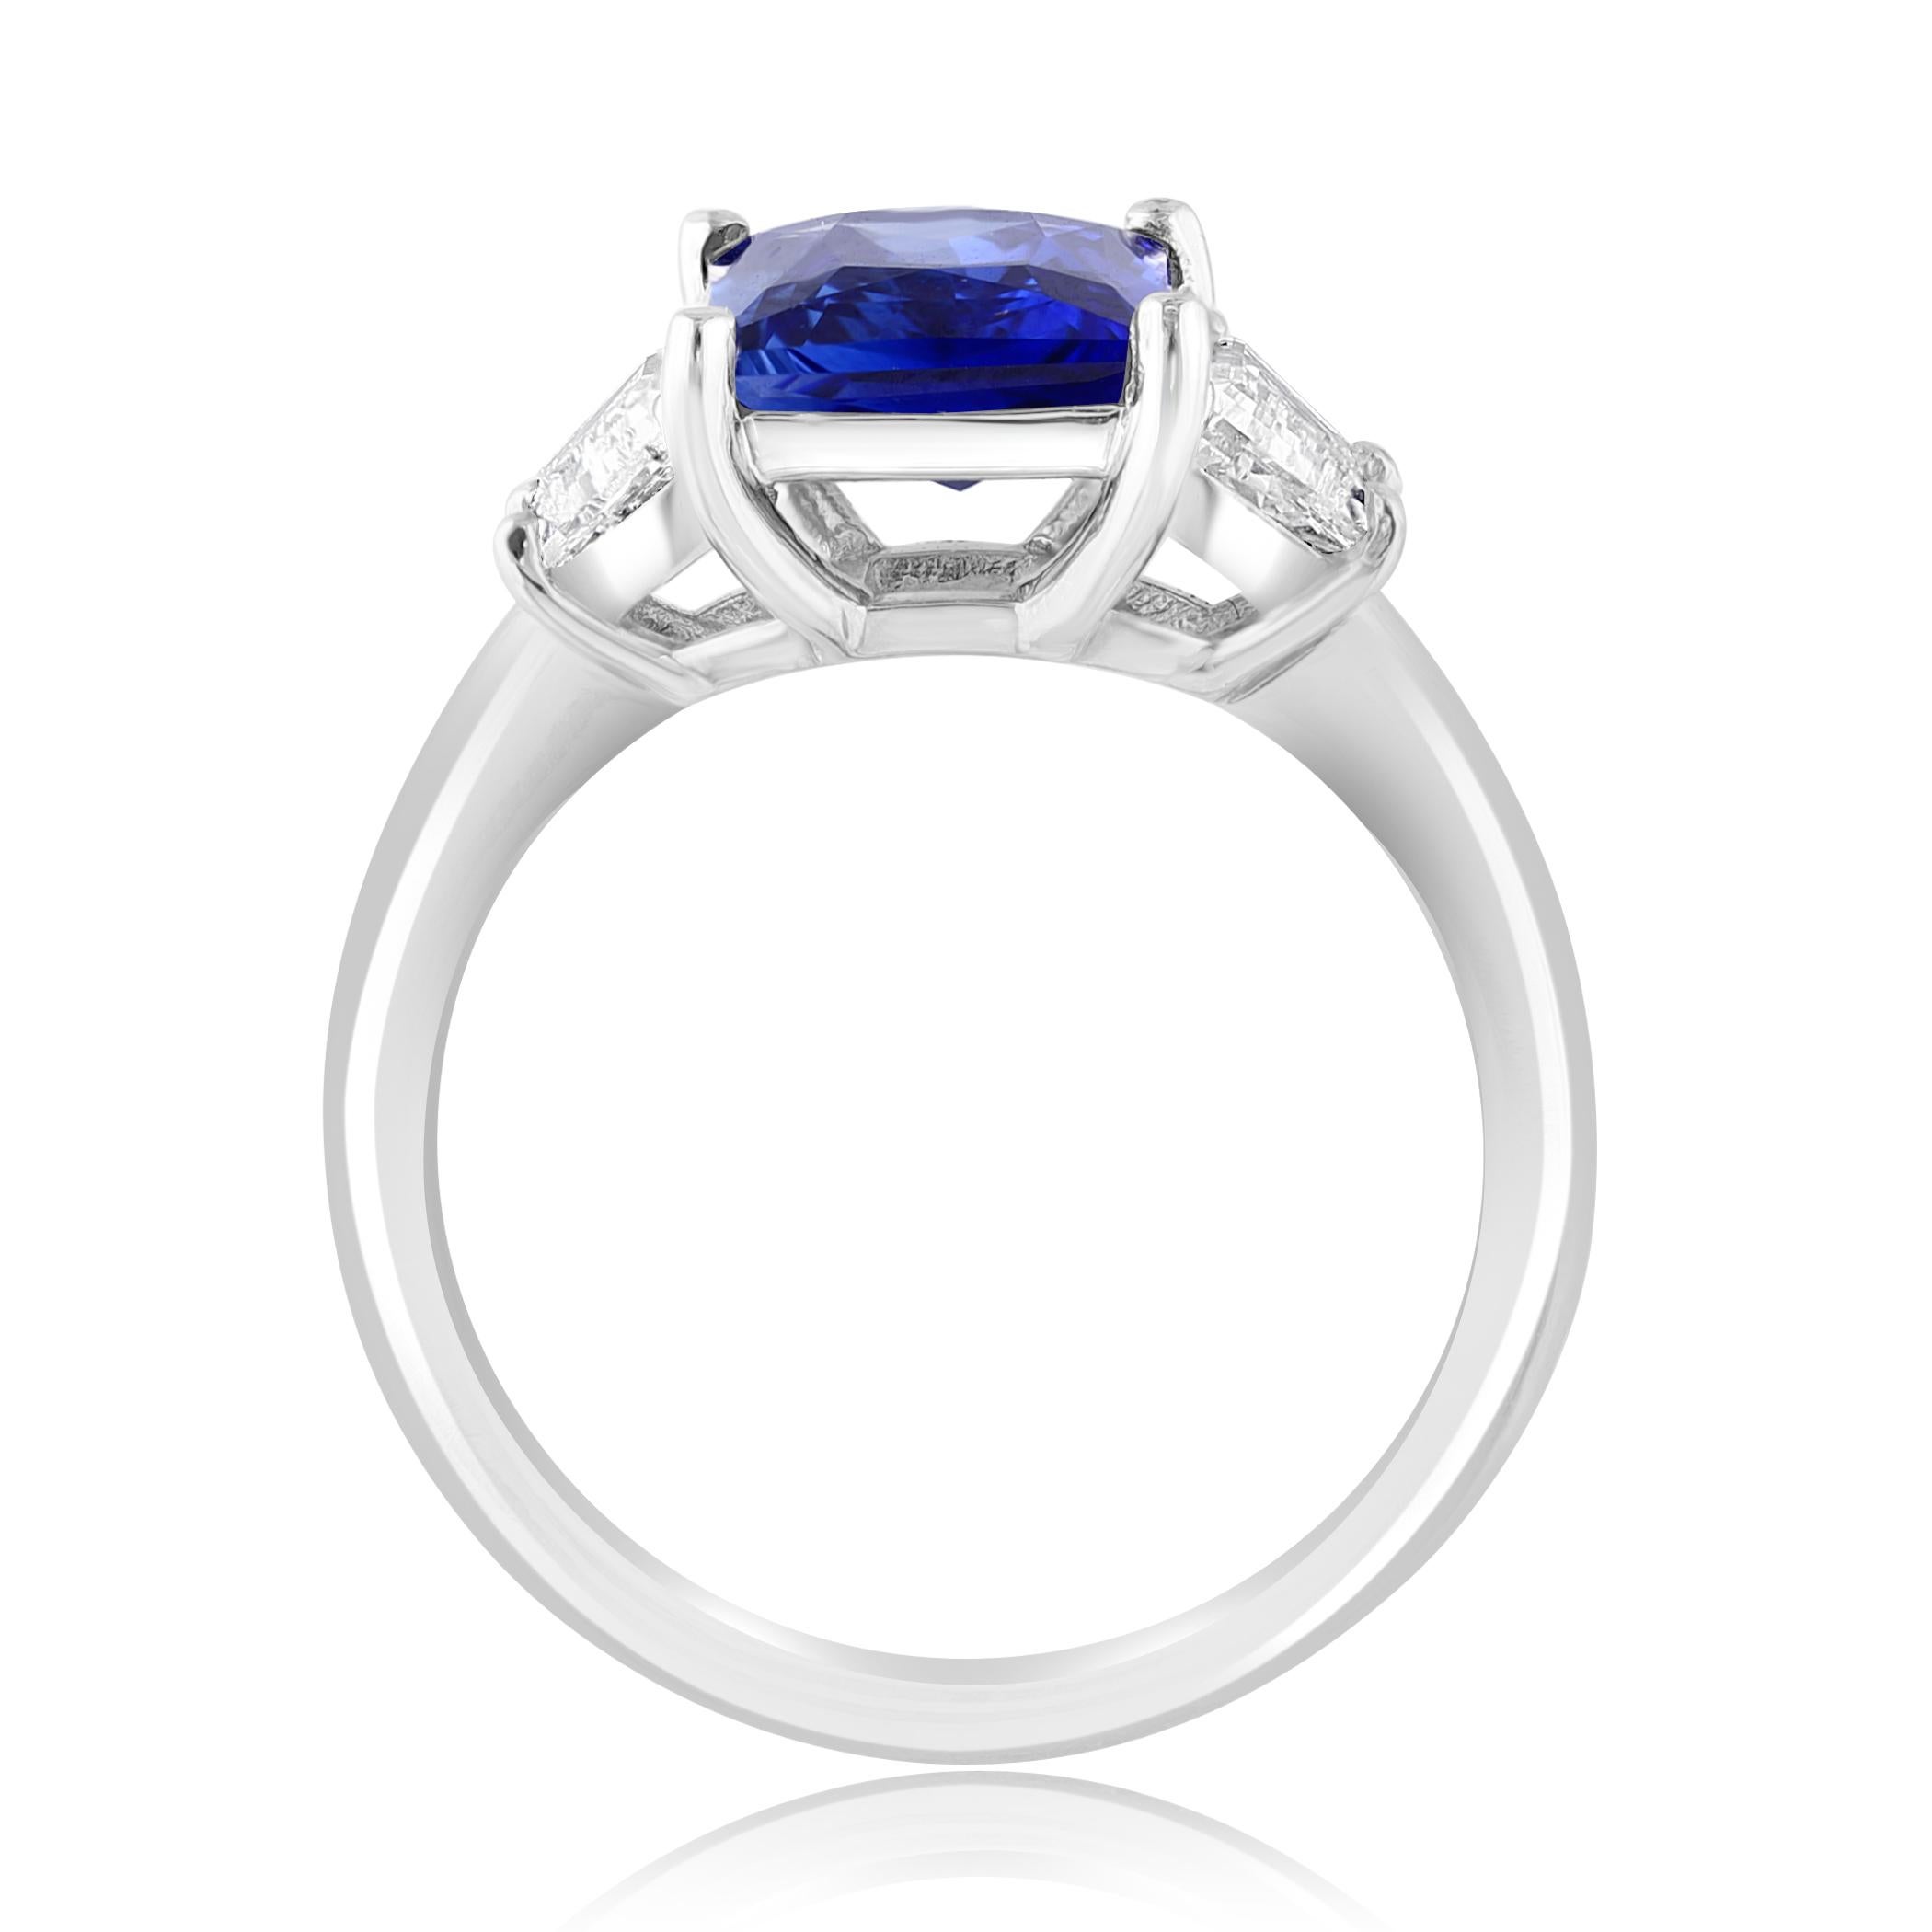 Modern 3.06 Carat Emerald Cut Blue Sapphire Diamond 3-Stone Engagement Ring in Platinum